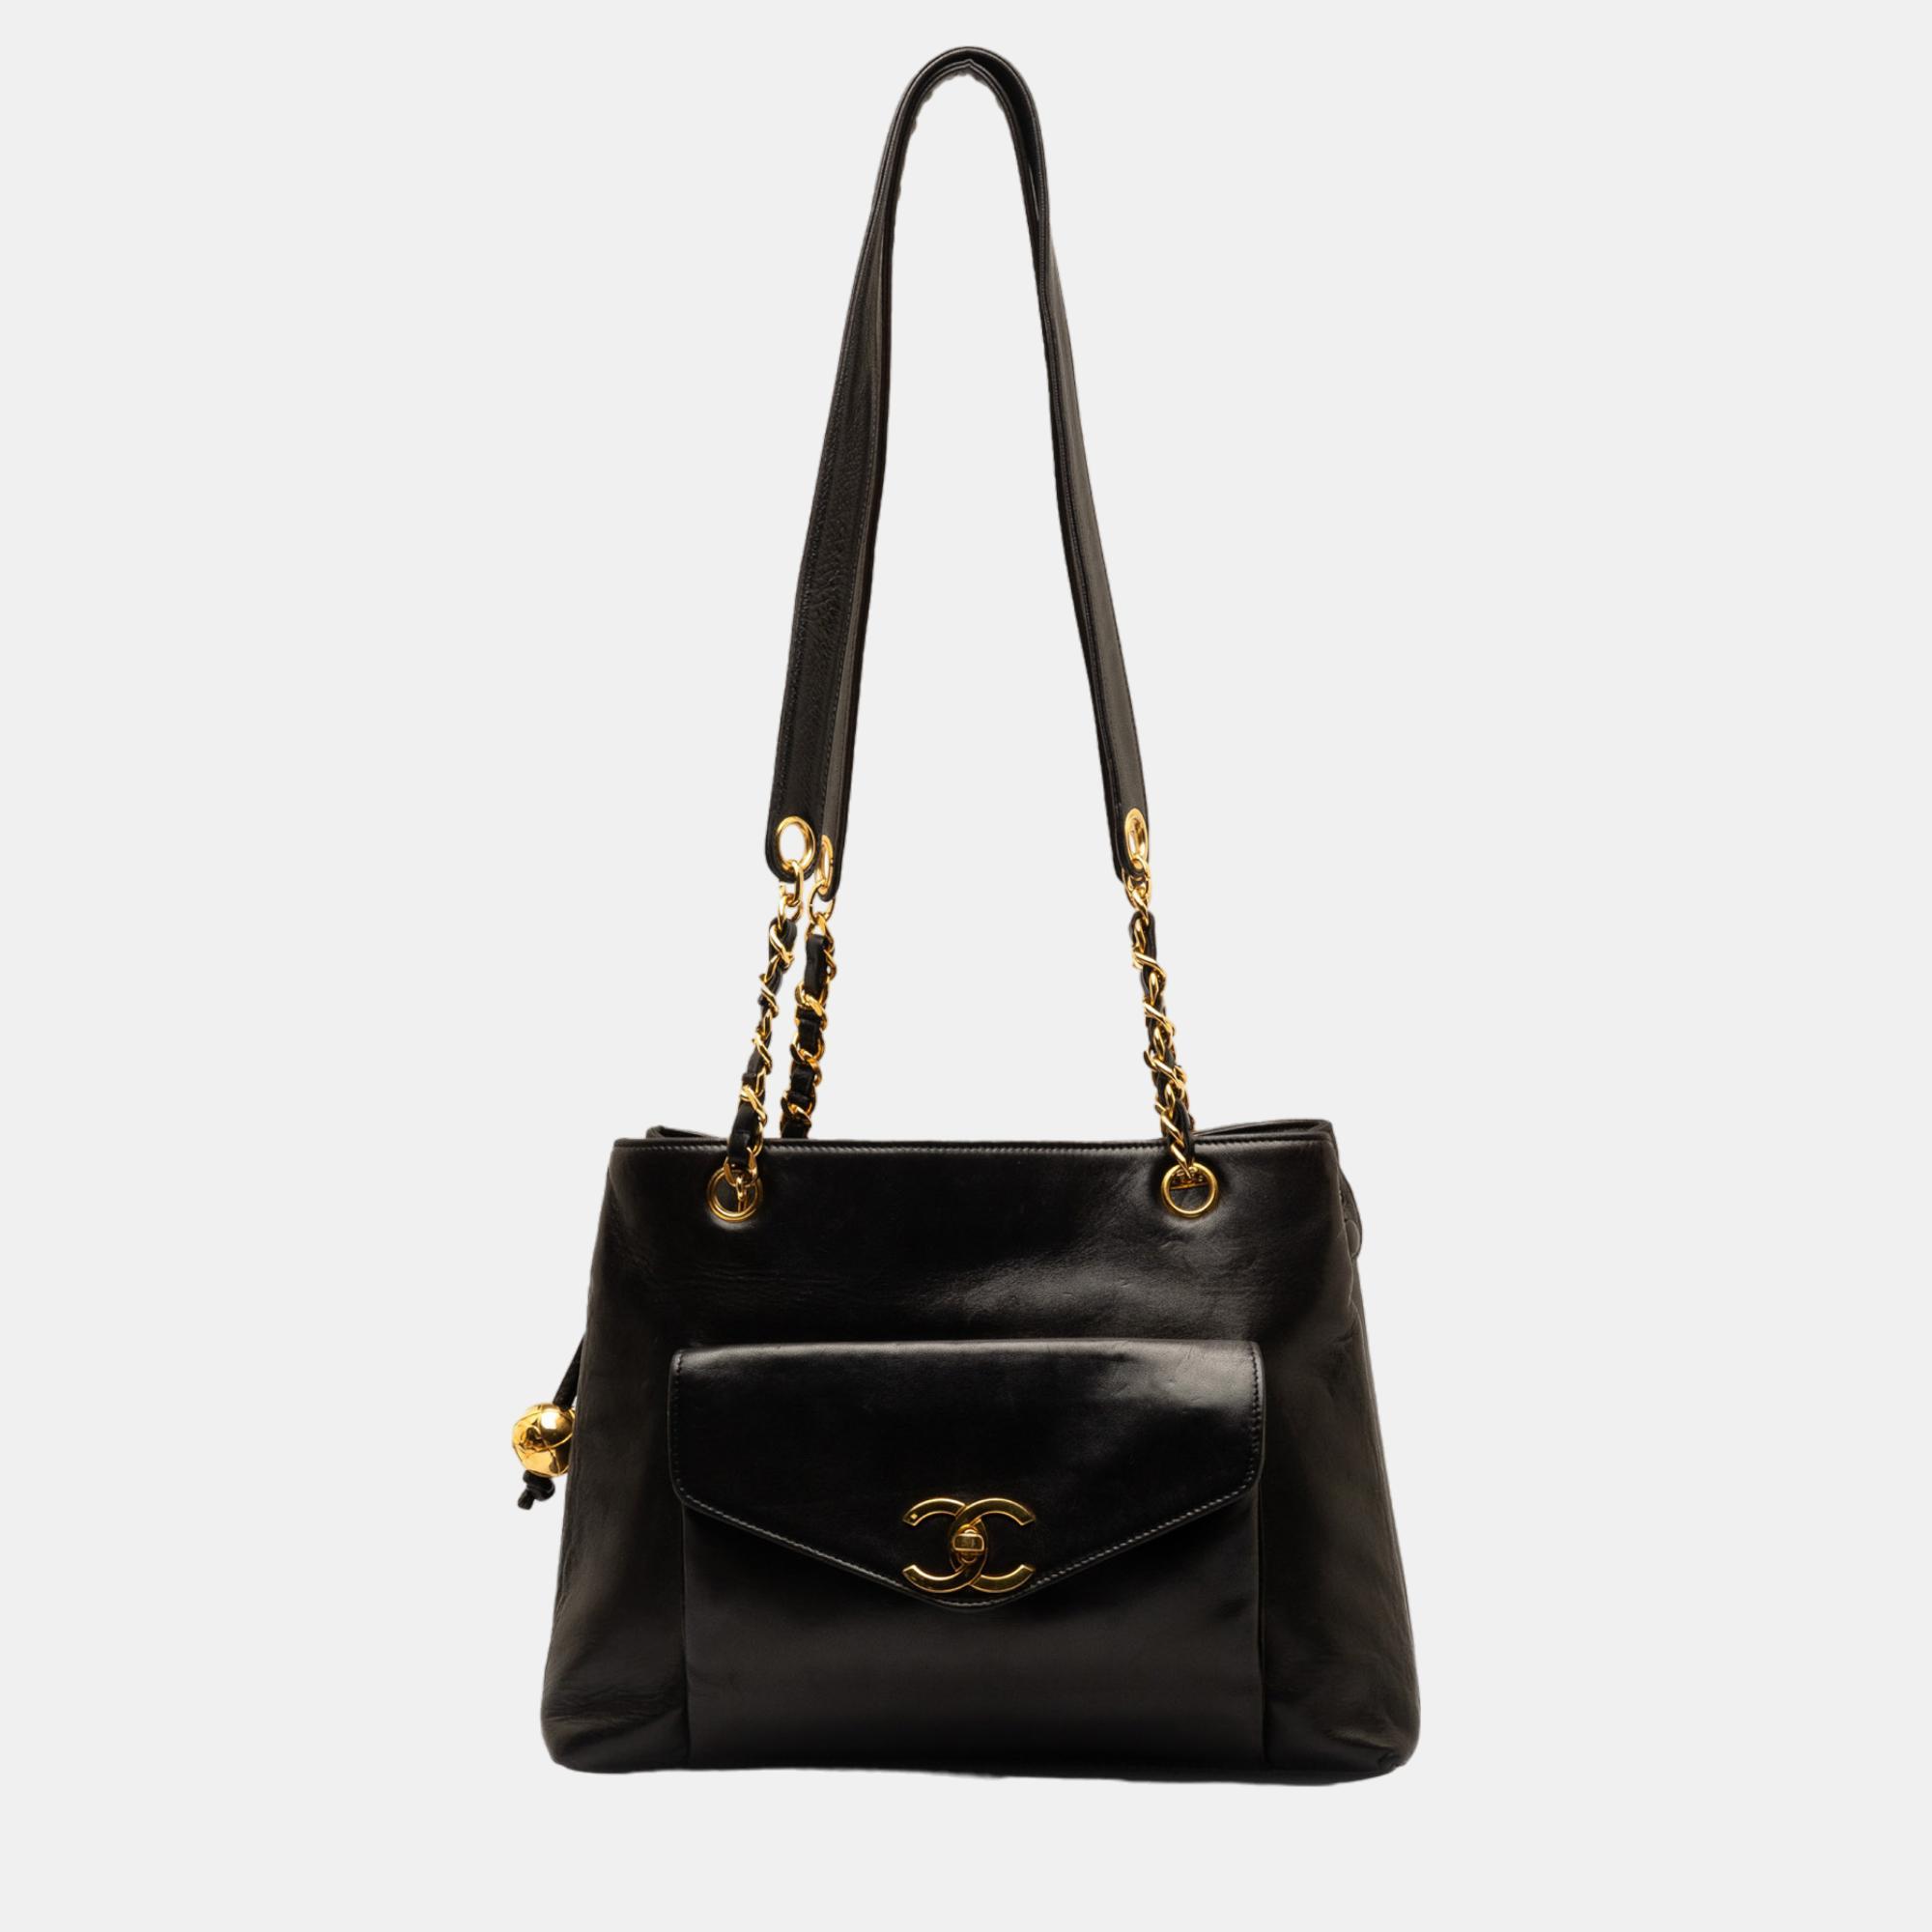 Chanel black cc lambskin front pocket tote bag